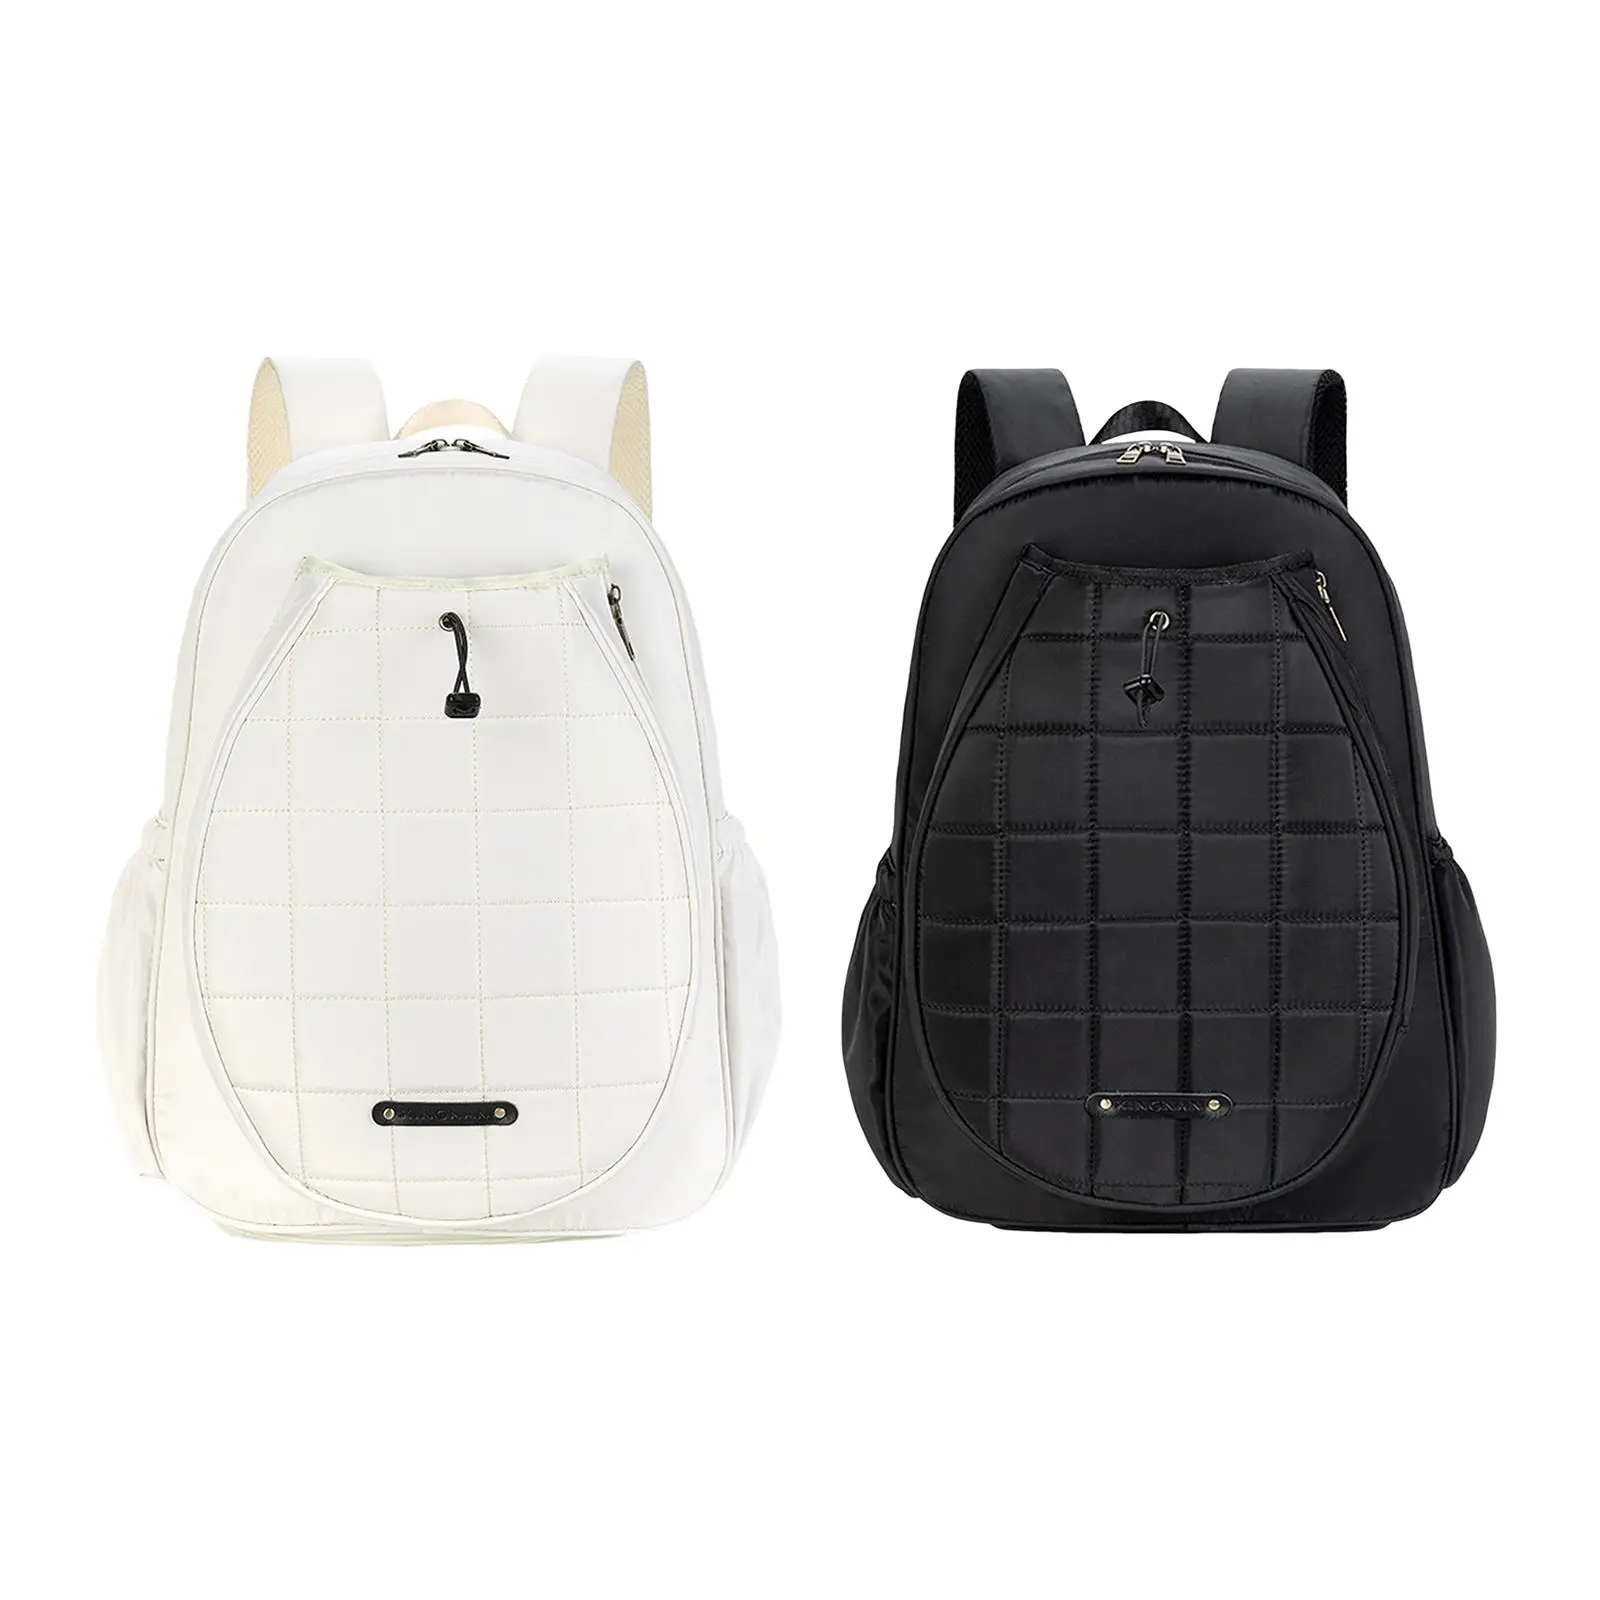 Tennis Backpack Tennis Bag Multifunctional Sport Bag Portable Large Capacity Racket Bag for Pickleball Paddles Balls Accessories